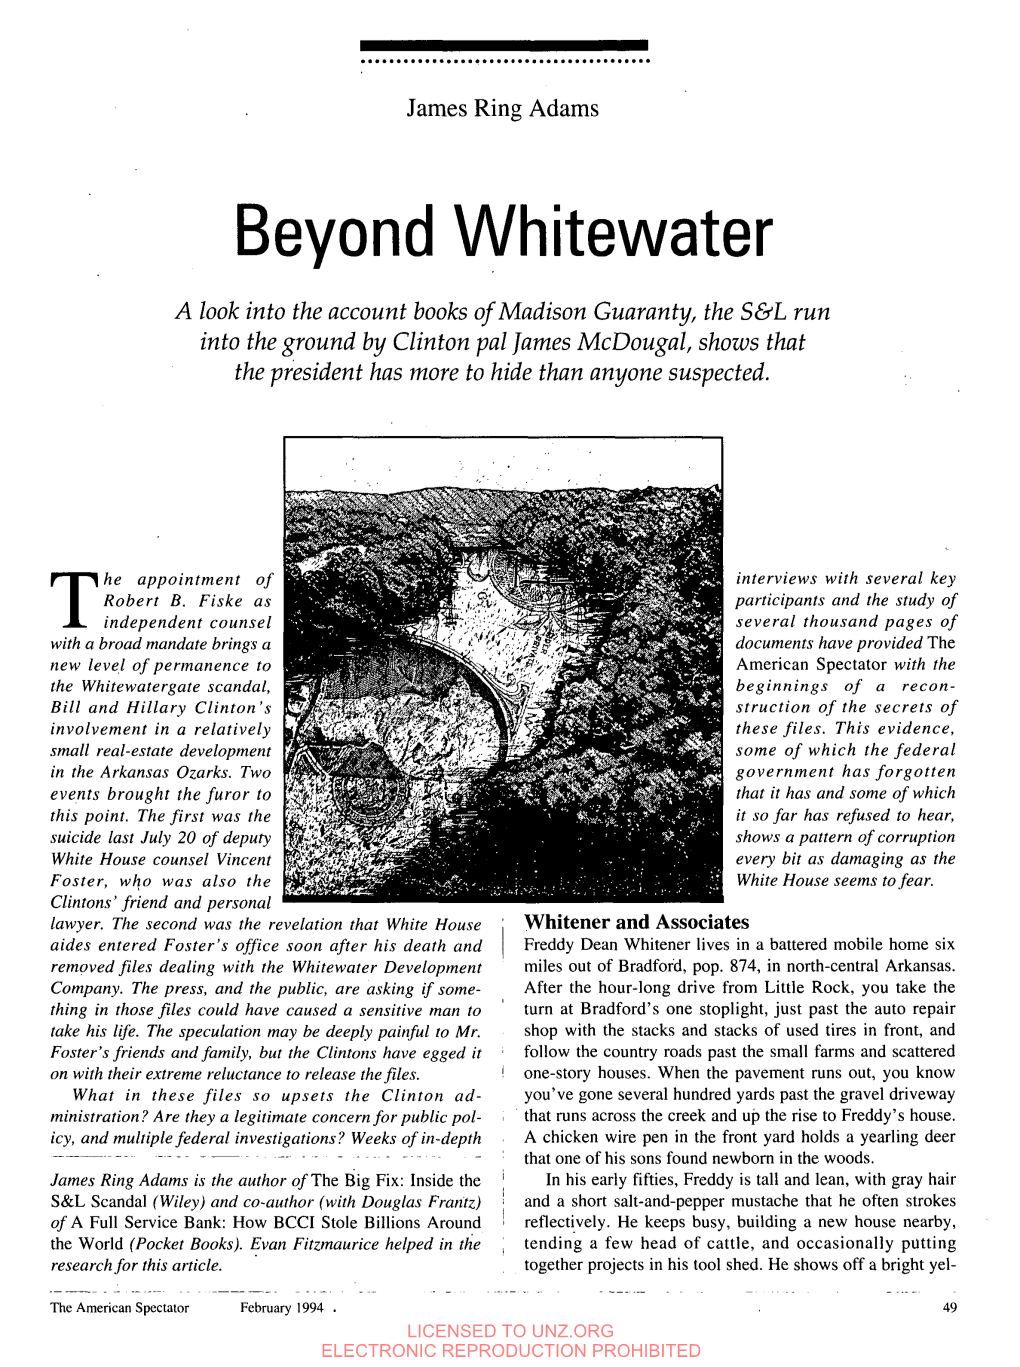 Beyond Whitewater